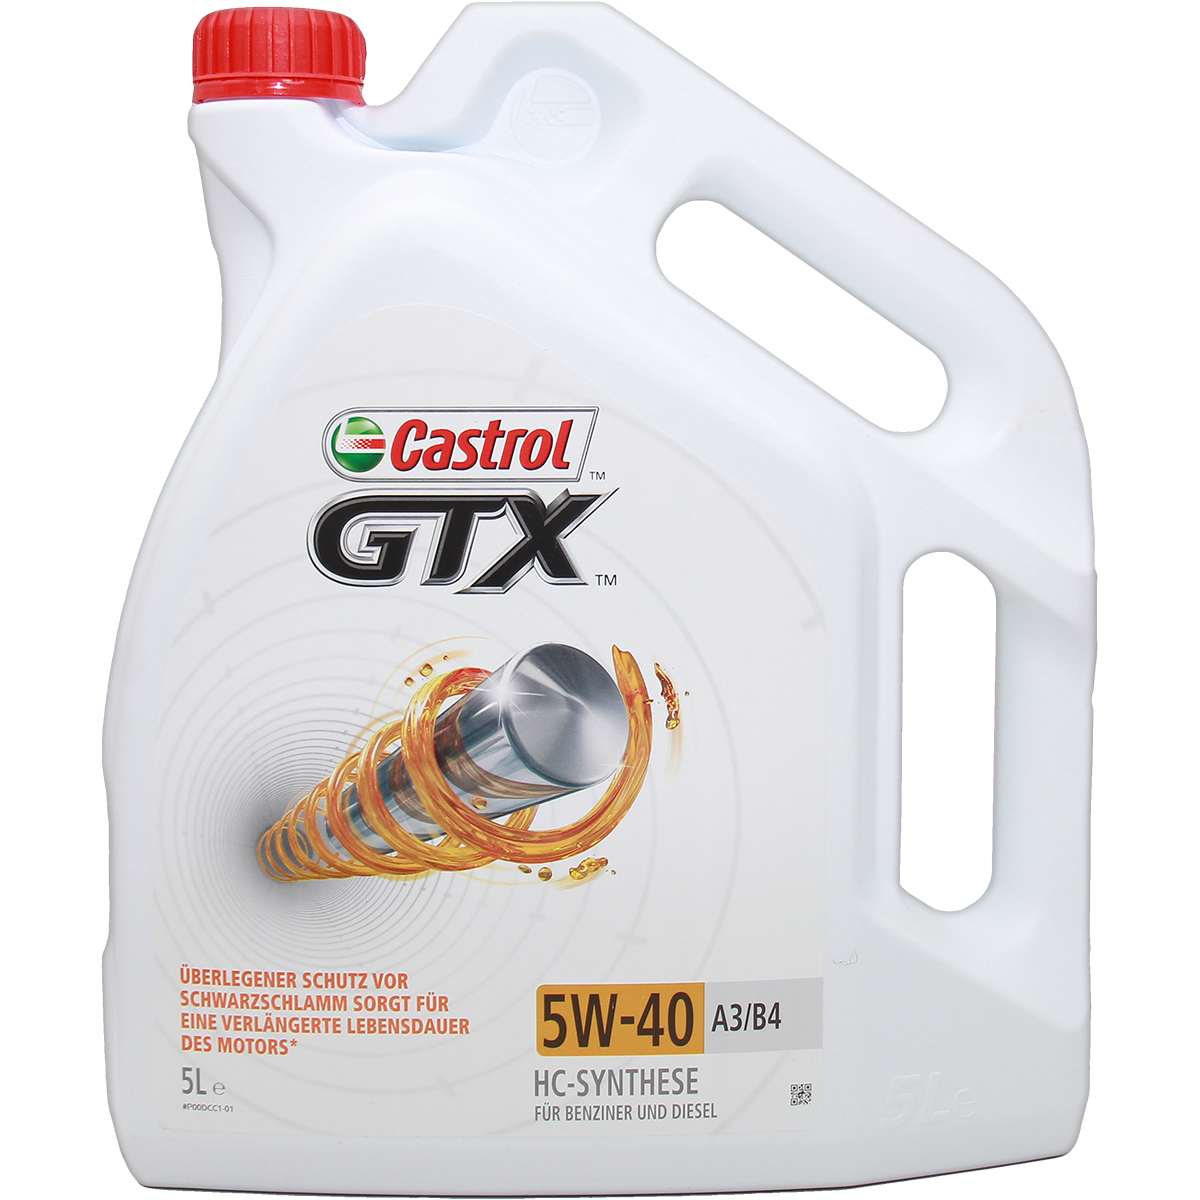 Castrol GTX 5W-40 A3/B4 5 Liter